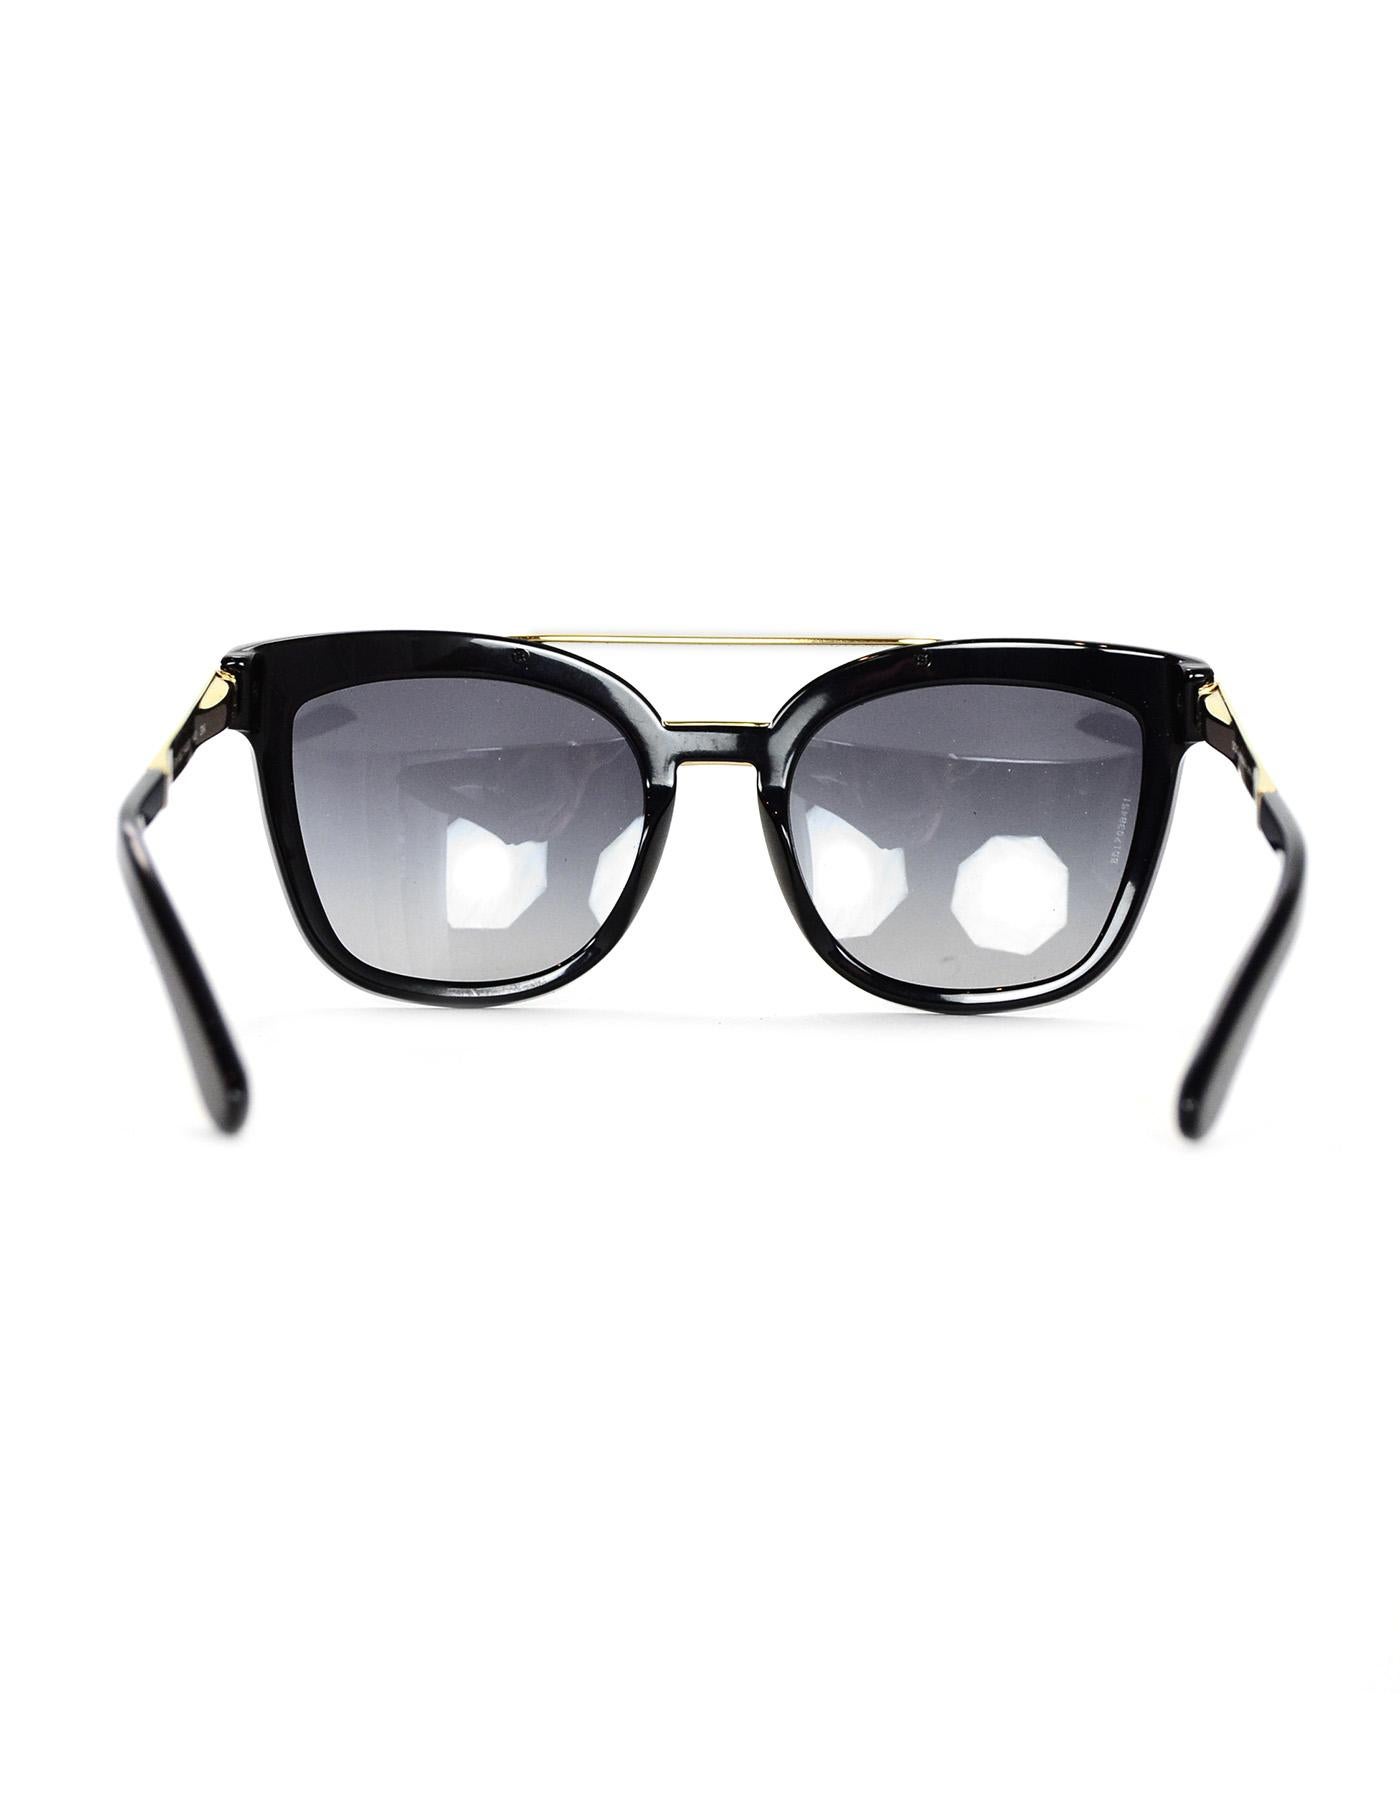 Women's Dolce & Gabbana DG 4269 Black Resin Sunglasses w/ Top Goldtone Bar